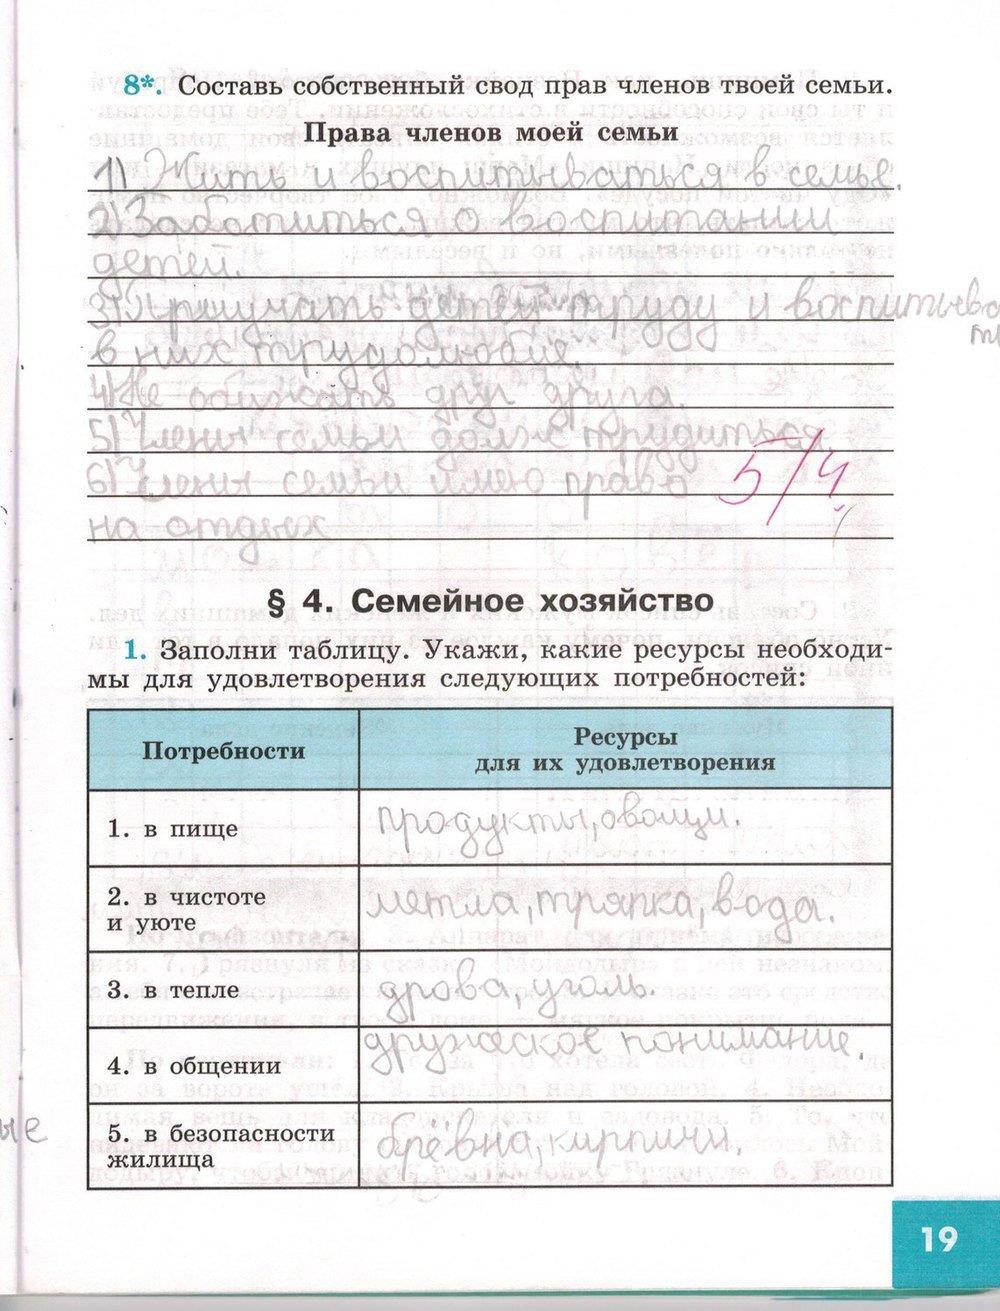 гдз 5 класс рабочая тетрадь страница 19 обществознание Иванова, Хотеенкова